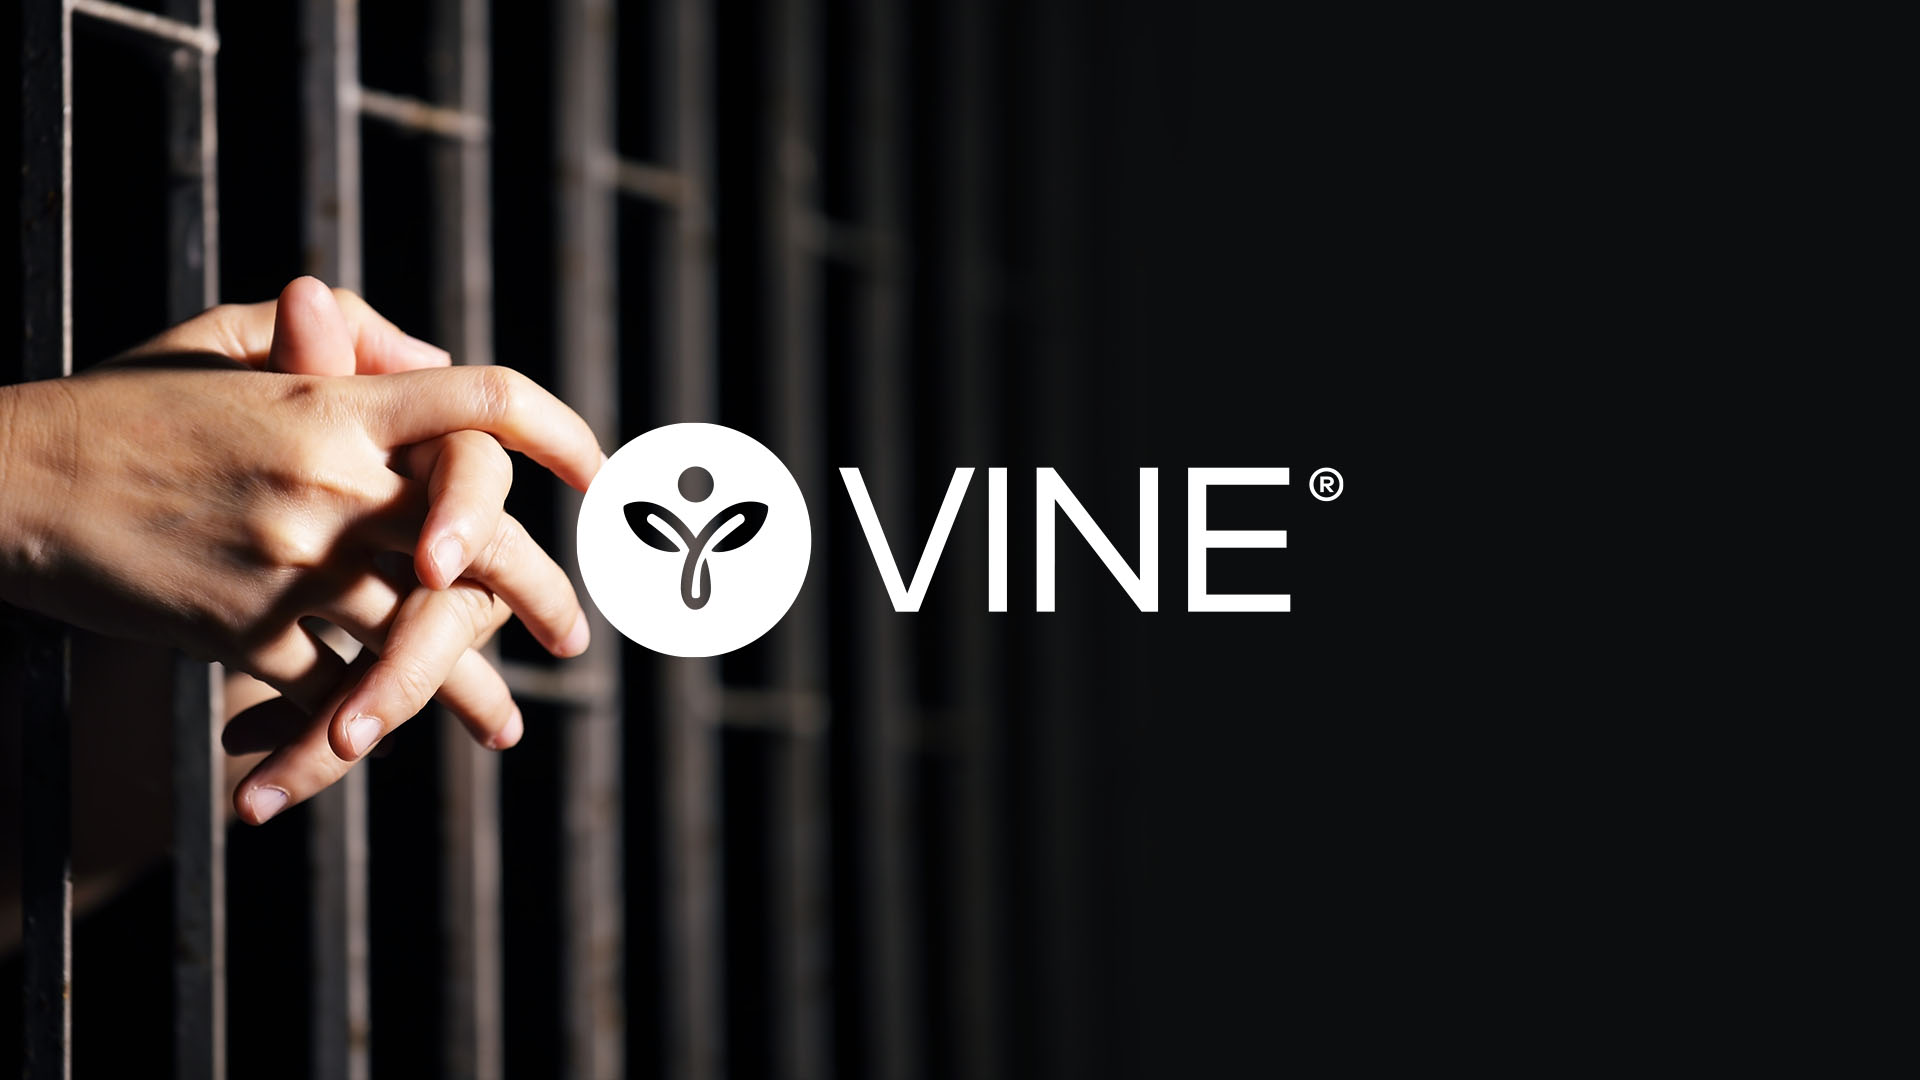 VINE logo and ad